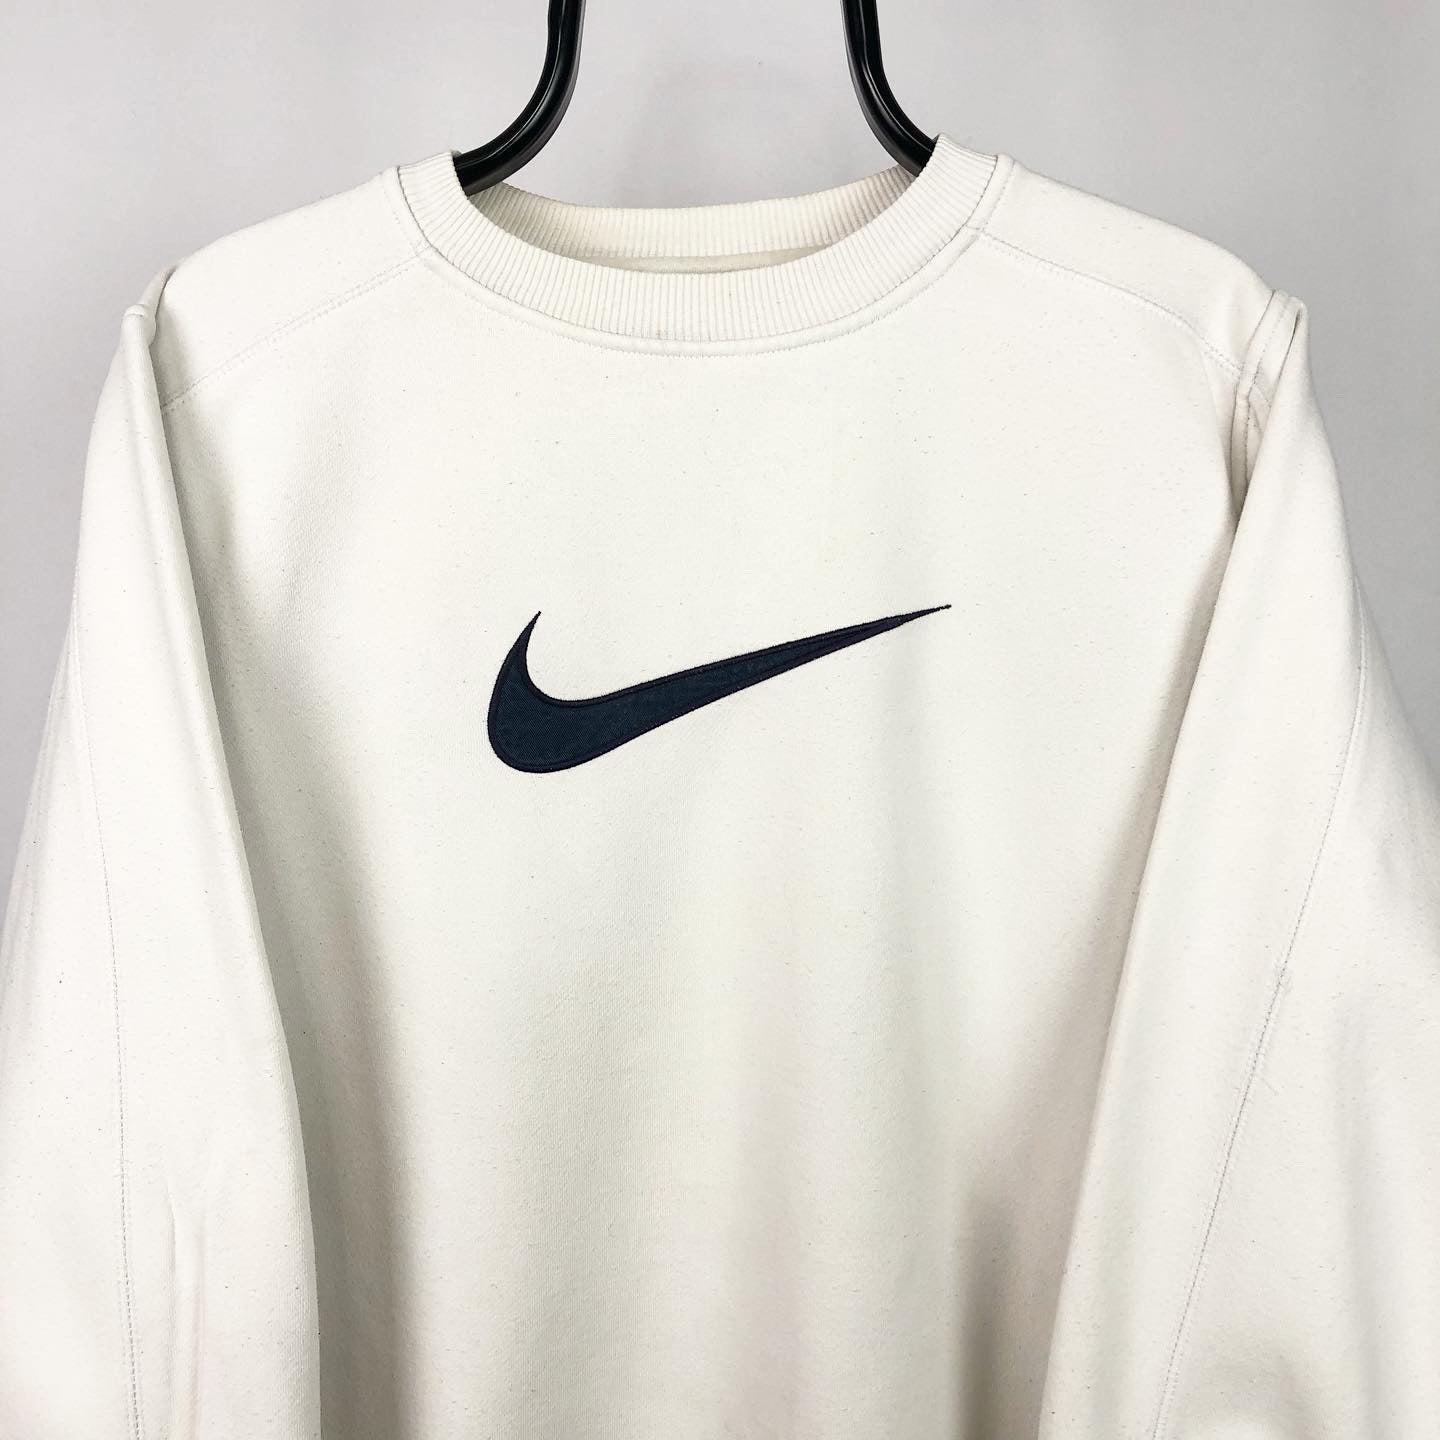 Vintage Nike Embroidered Swoosh Sweatshirt in White - Men's Small/Women's Medium